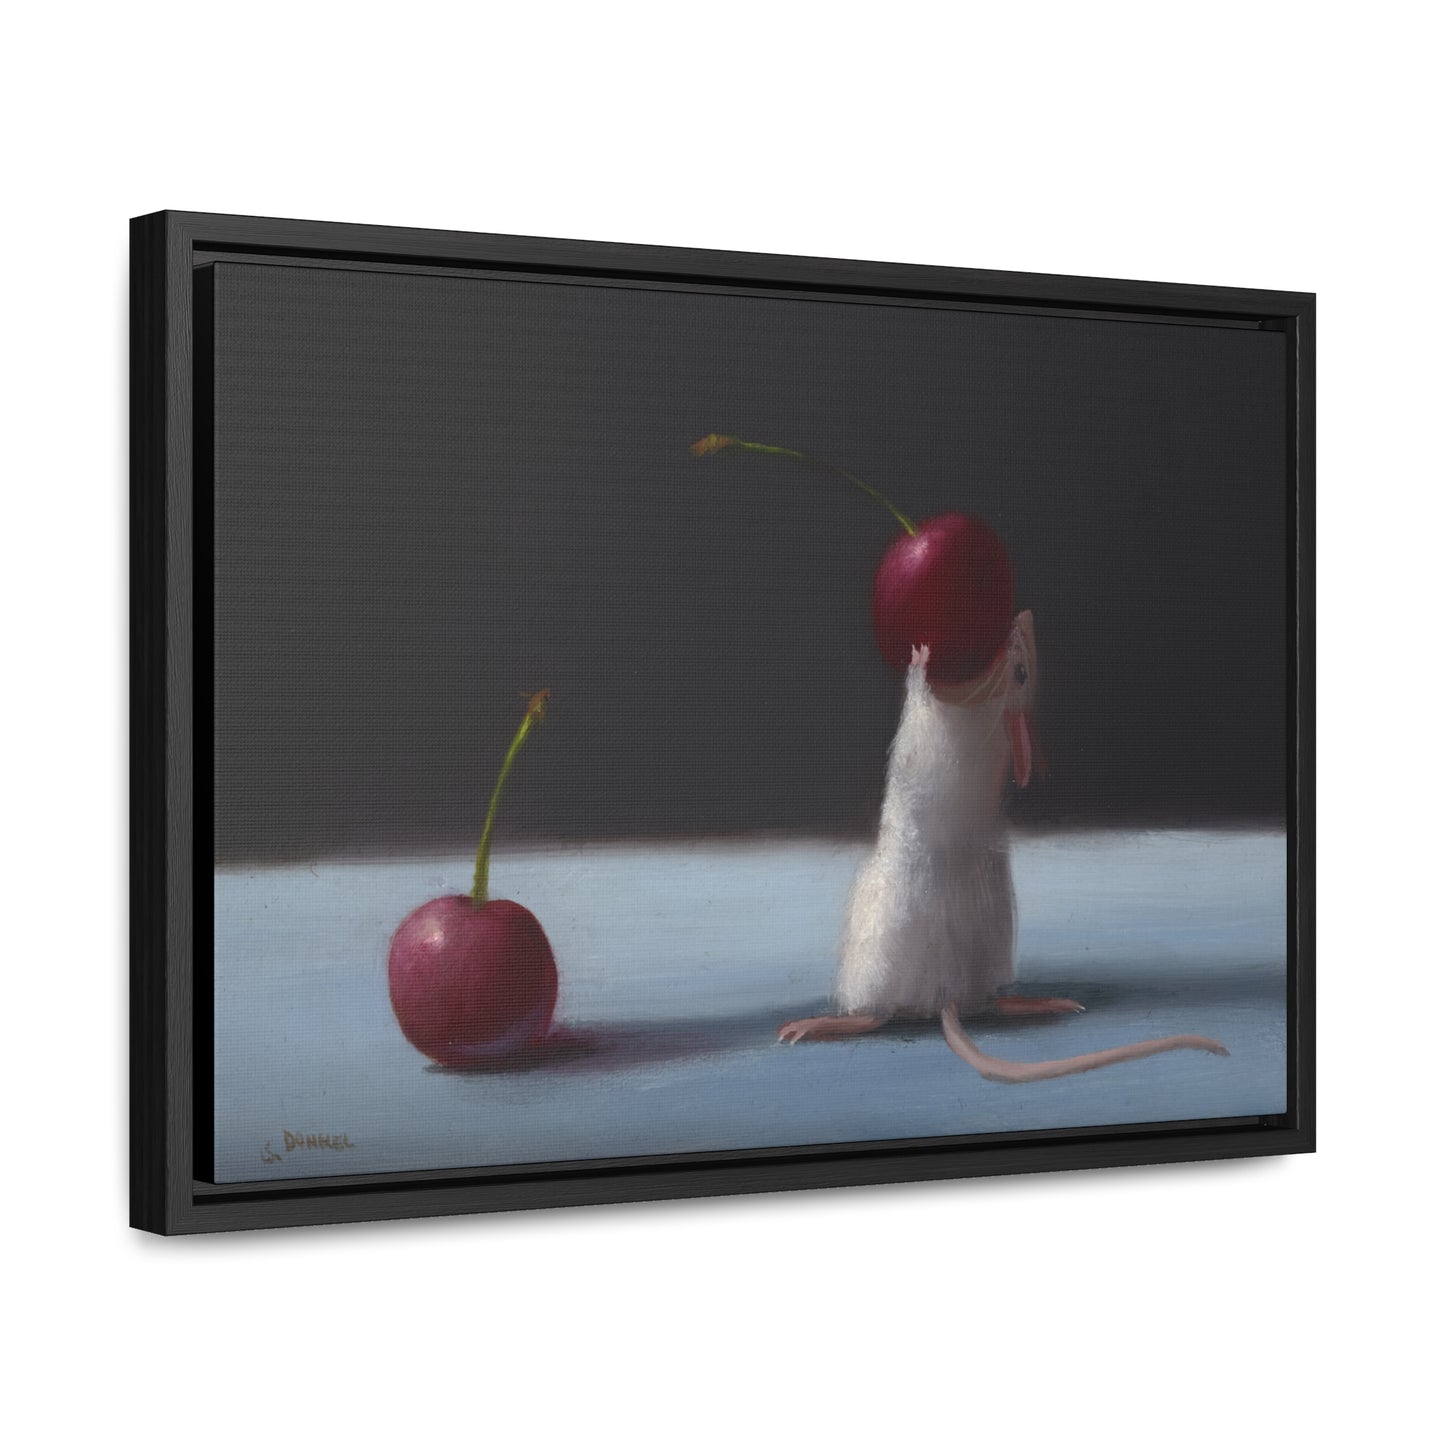 Stuart Dunkel: "Two Cherries" - Framed Canvas Reproduction